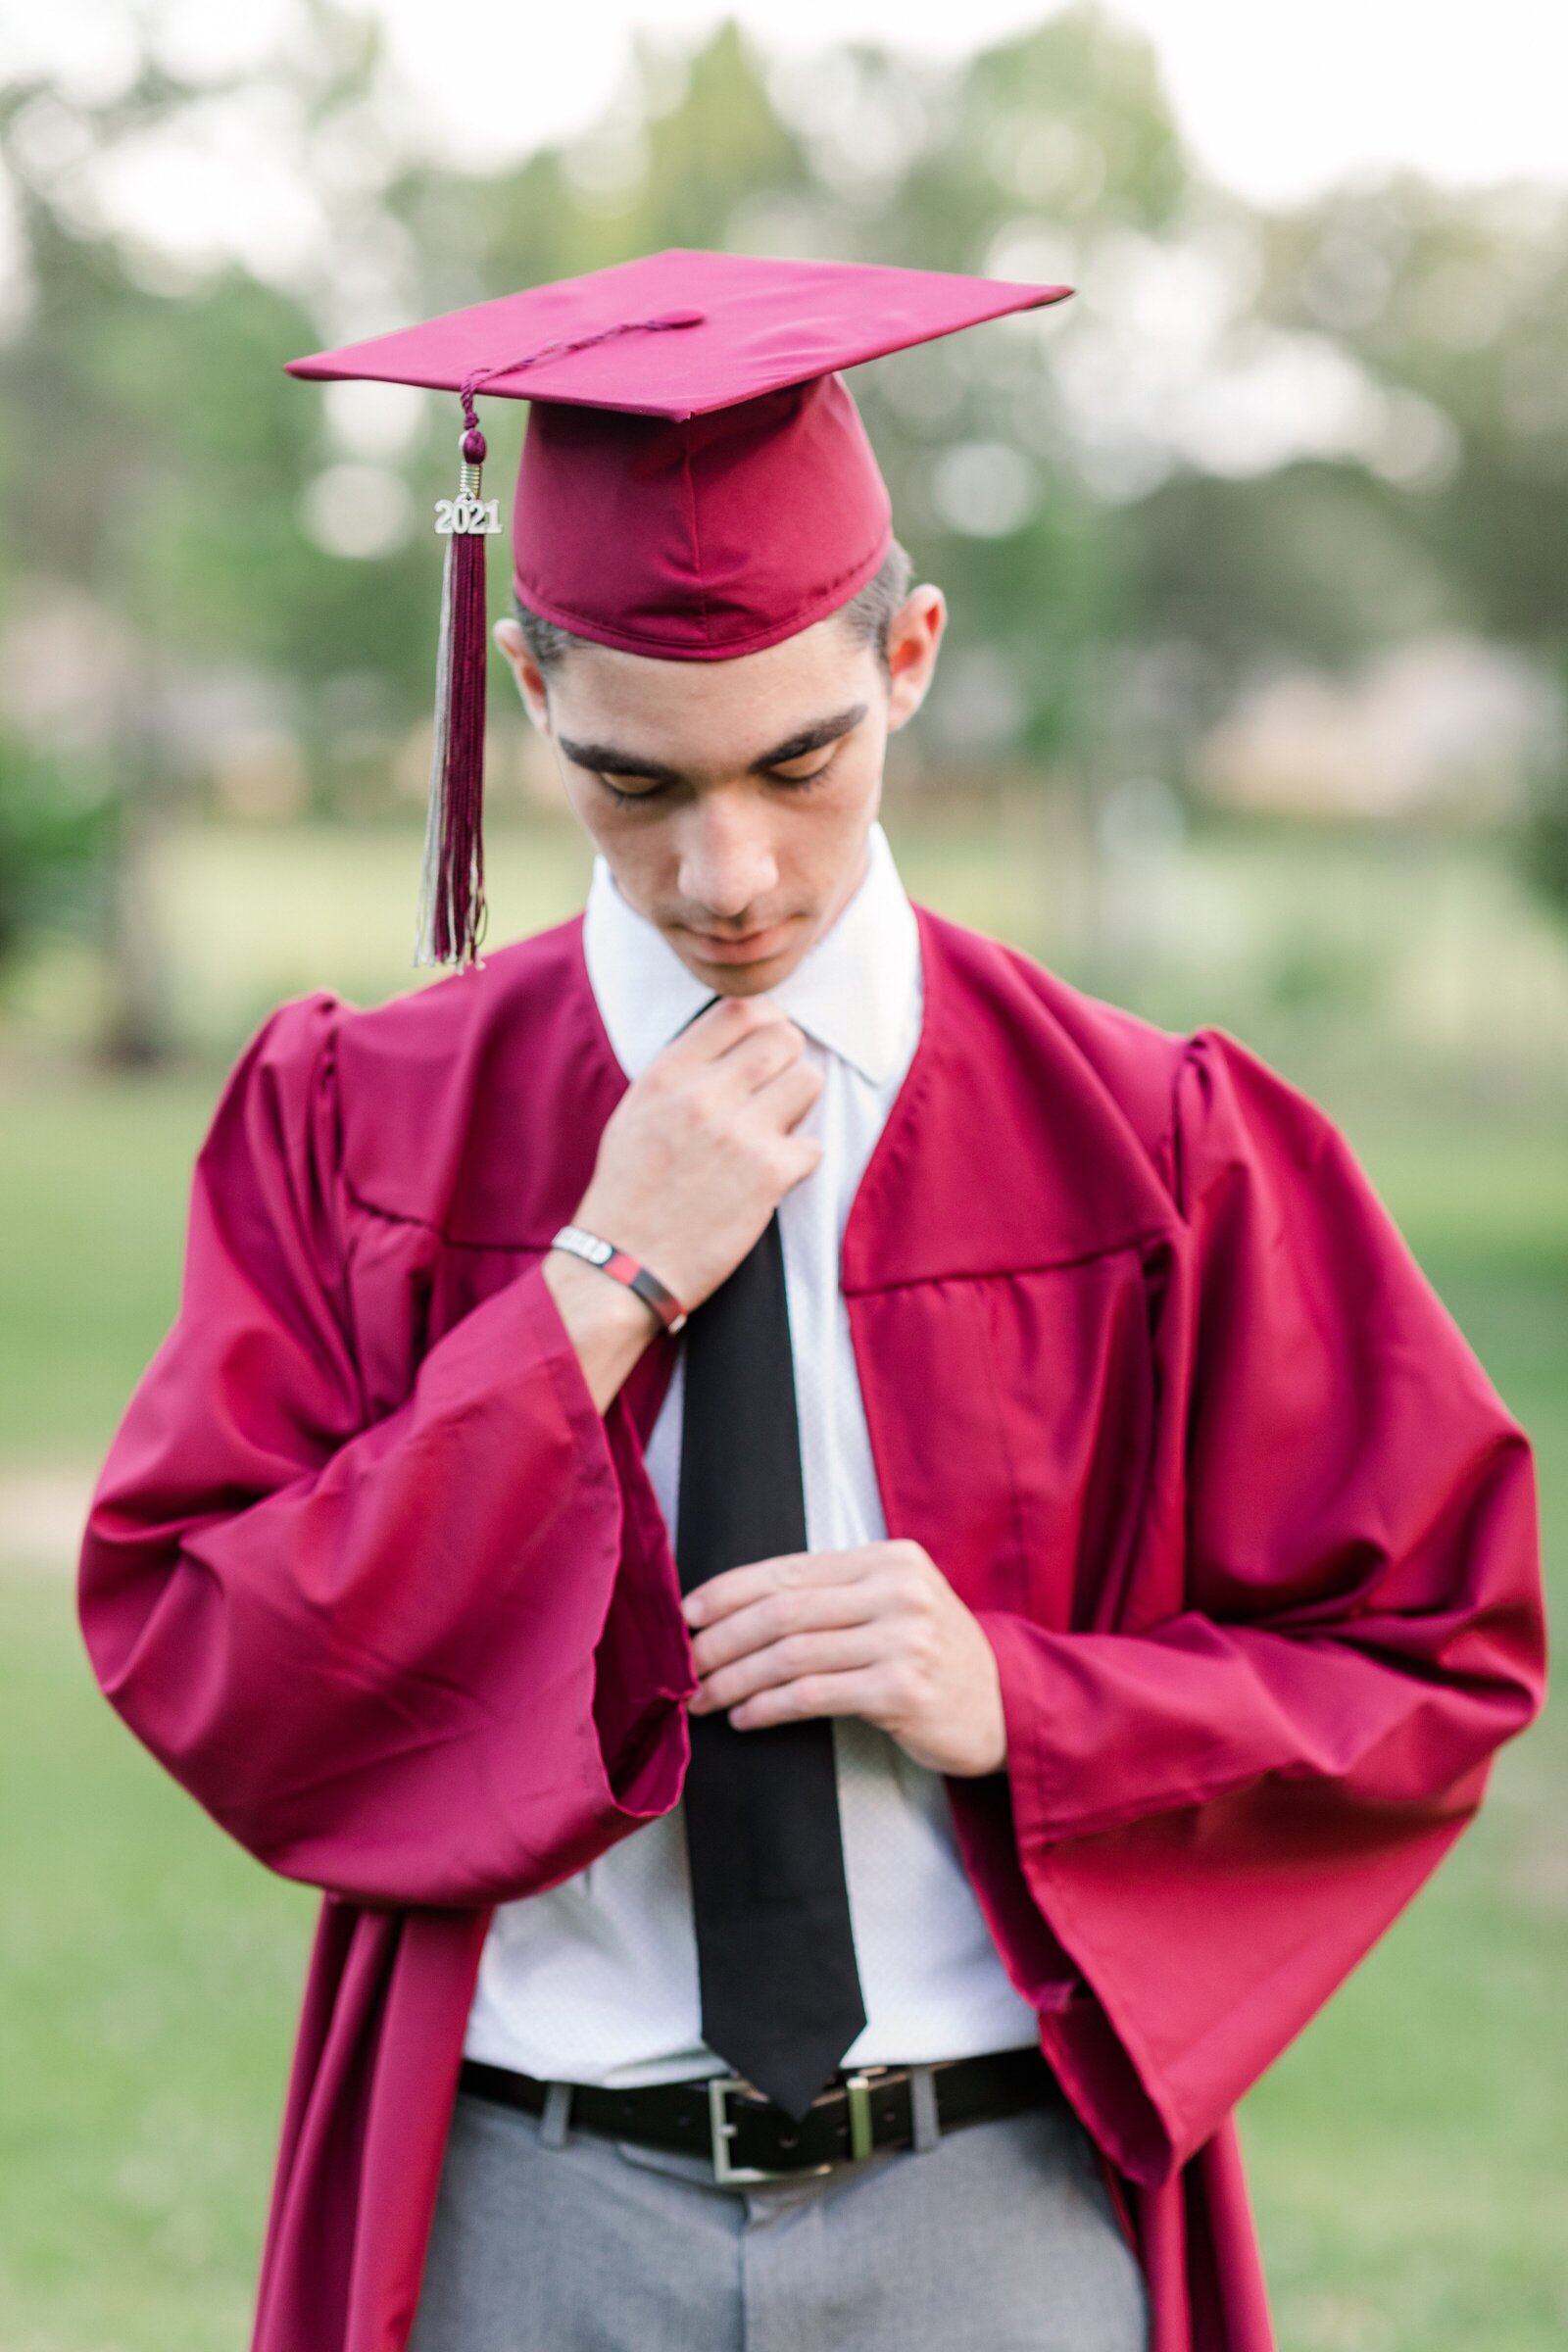 High school boy senior graduation photos with cap and gown.